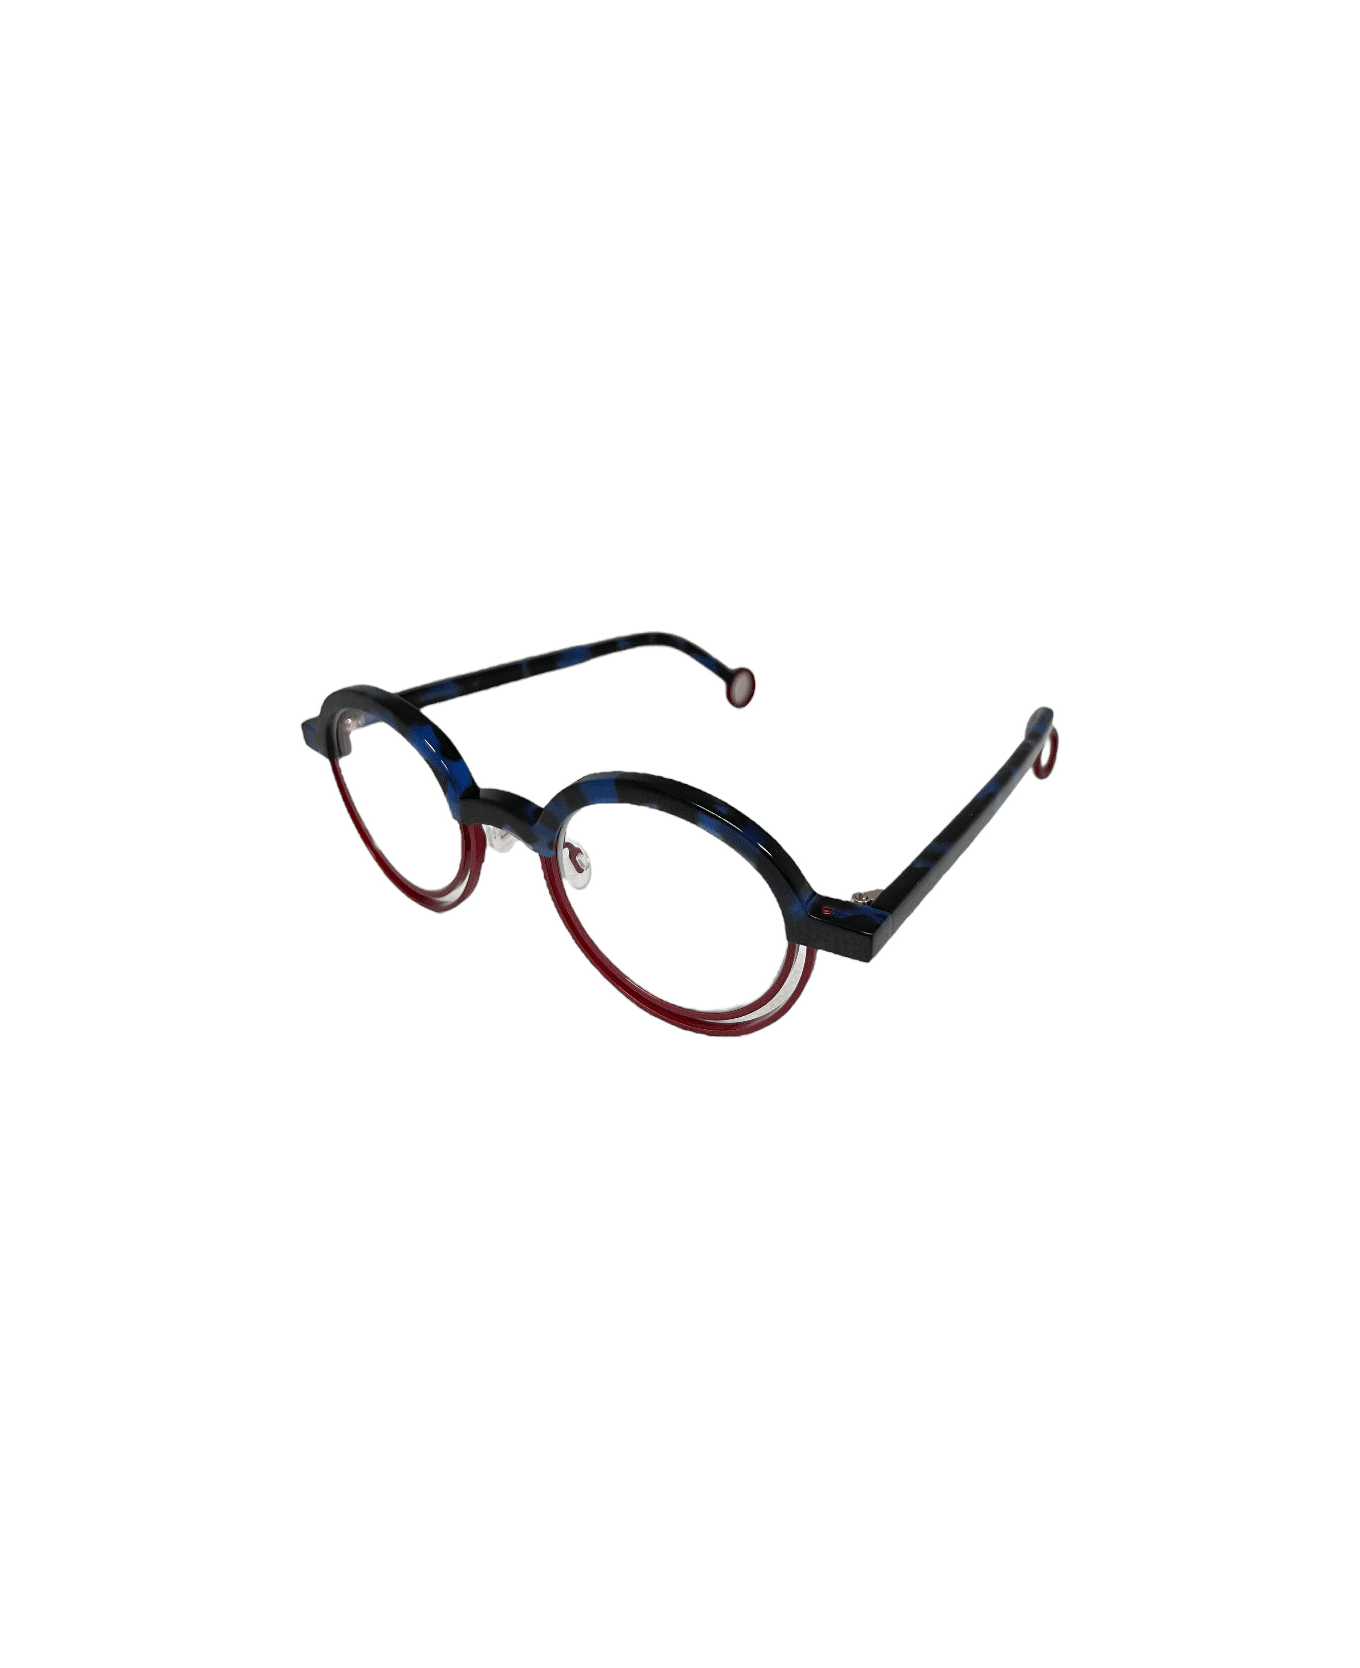 Theo Eyewear Bumper - Red & Blue Glasses